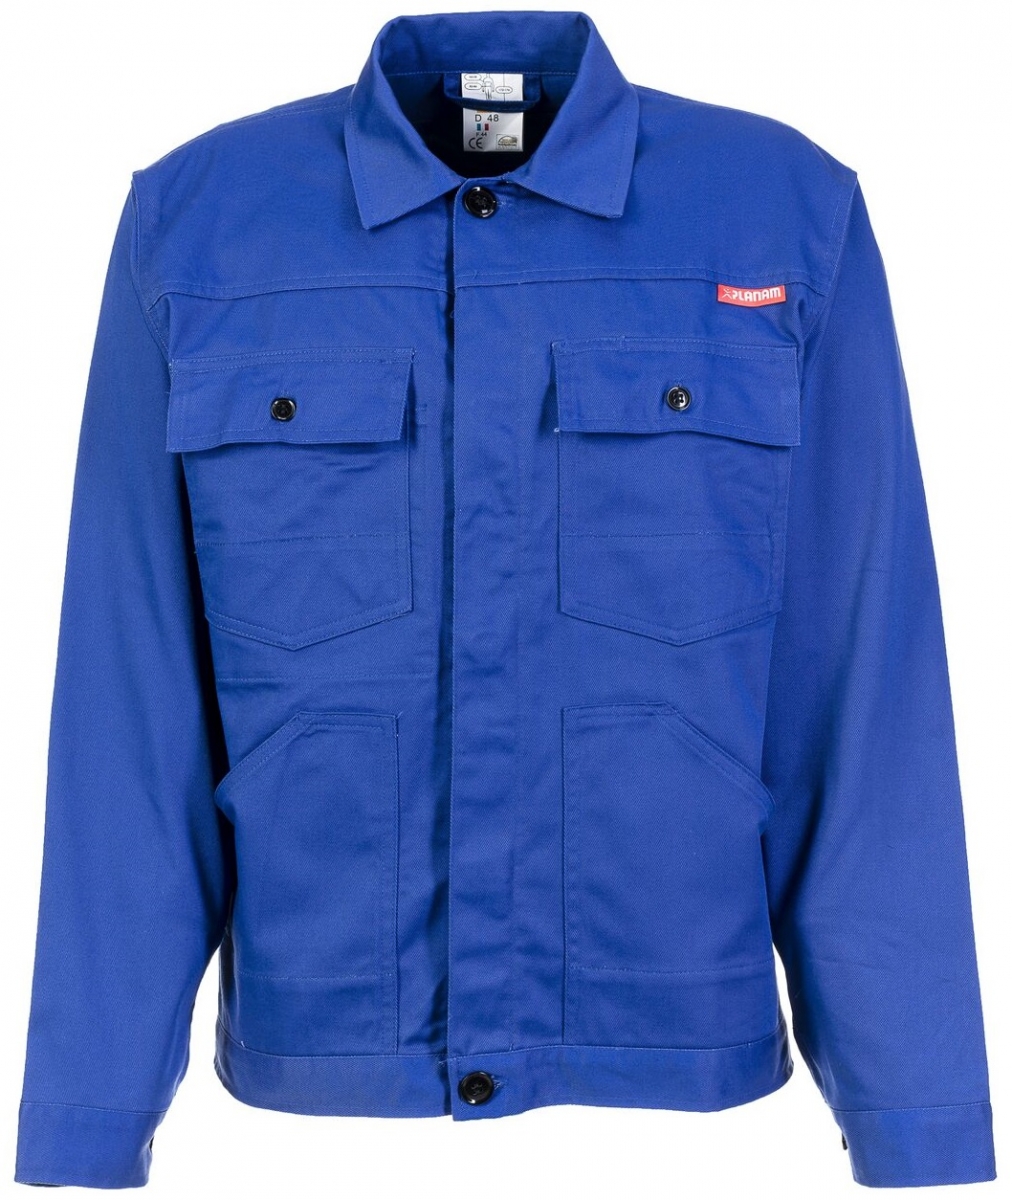 PLANAM-Workwear, Arbeits-Berufs-Bund-Jacke, MG 290 kornblau